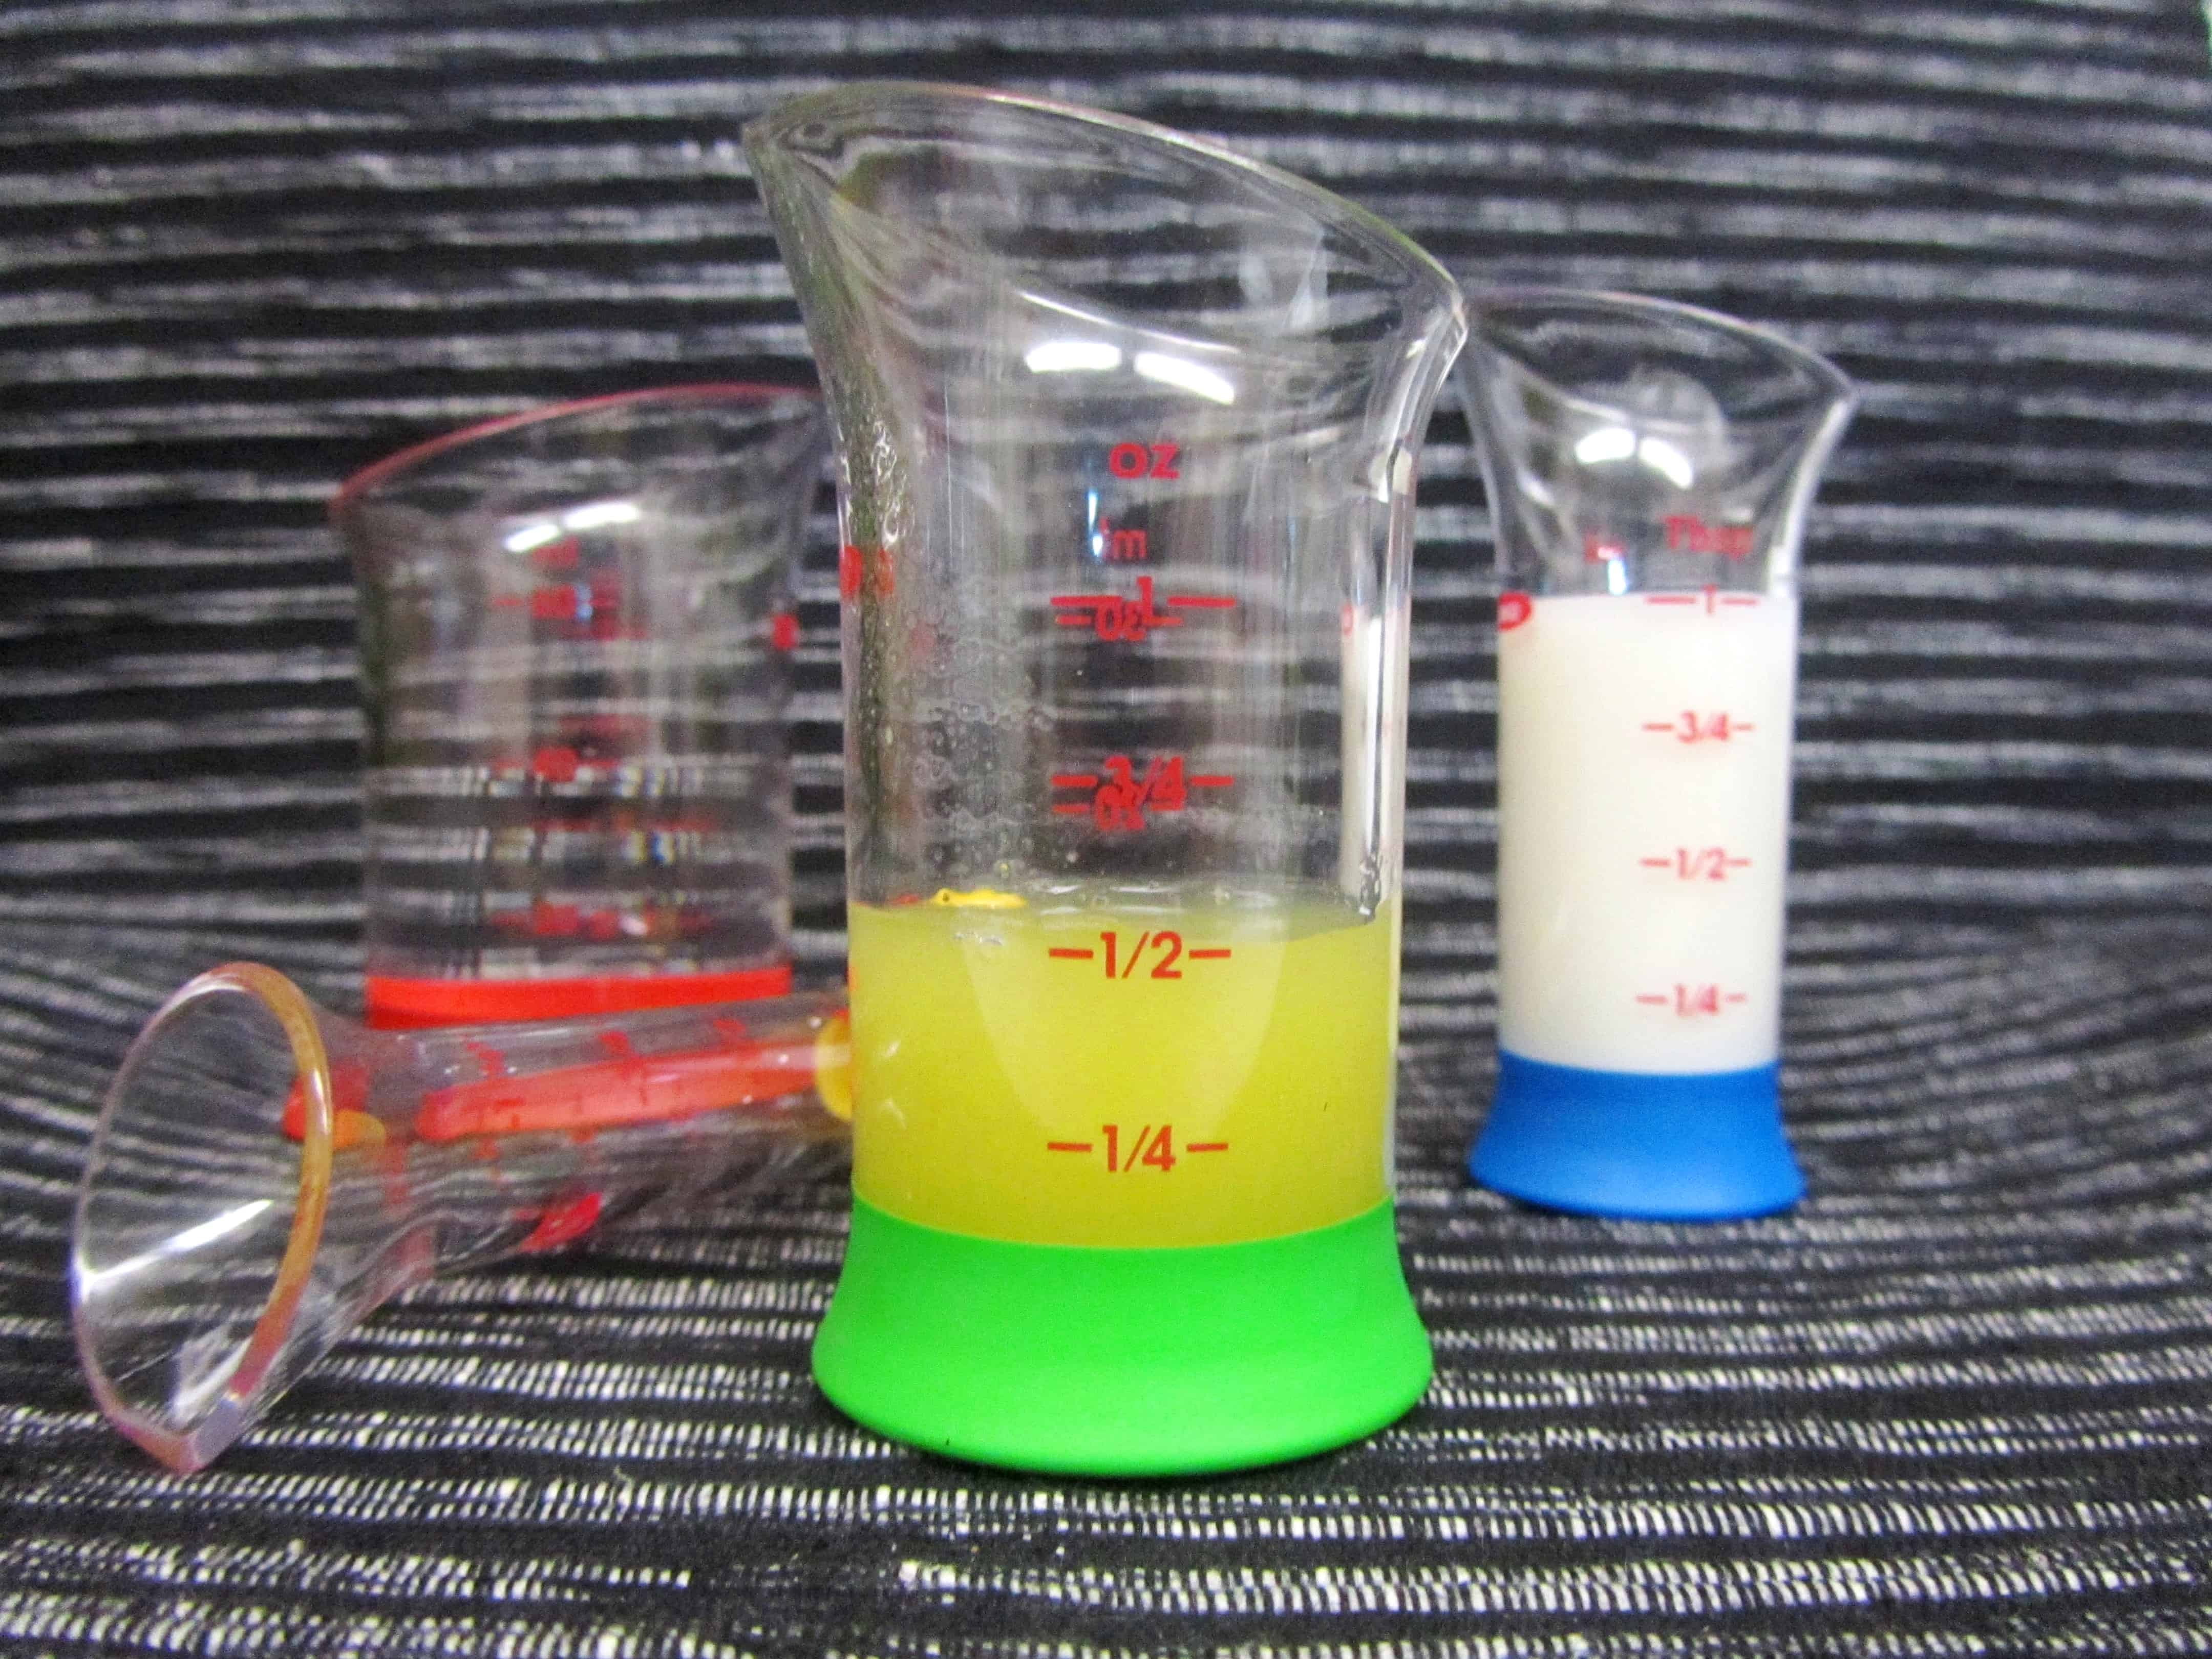 Review: OXO Mini Measuring Beakers & Funfetti Cake Shots